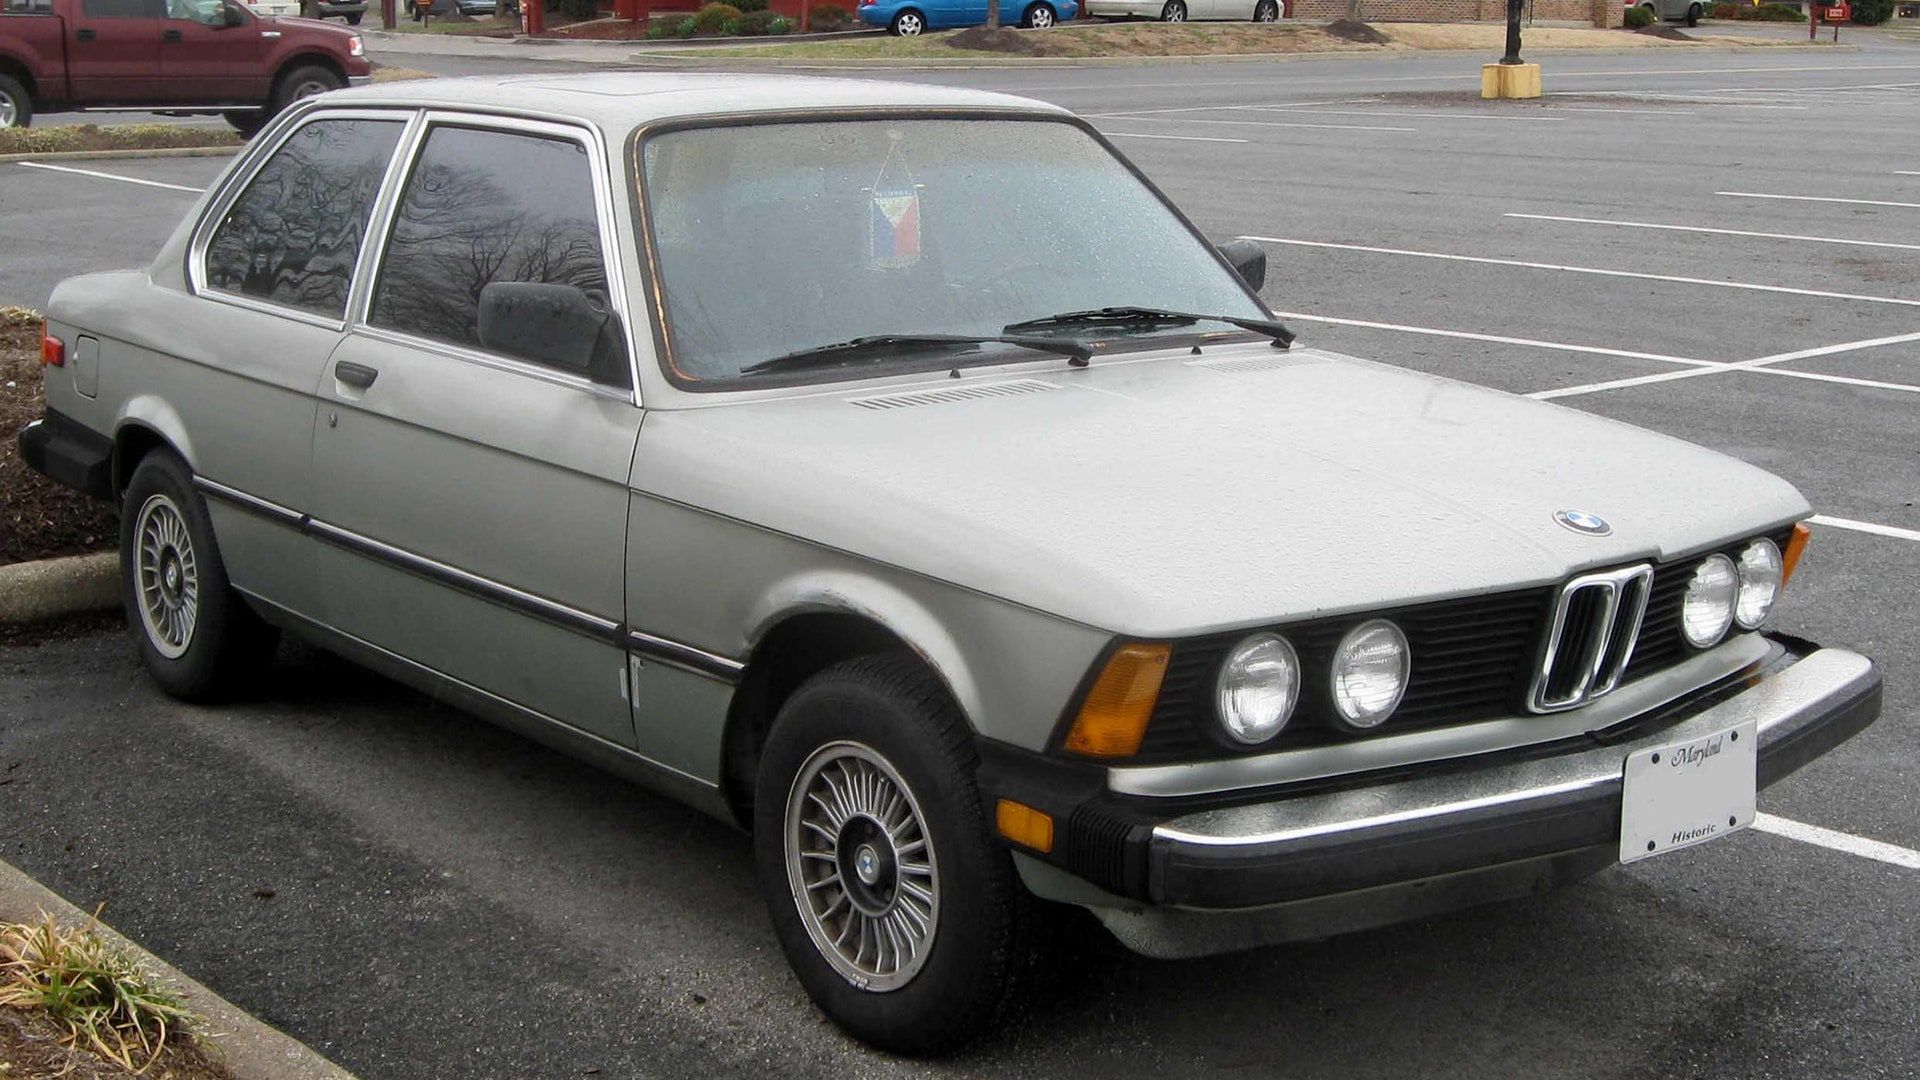 <img src="elon-musk-bmw.jpg" alt="A 1978 BMW 320i">